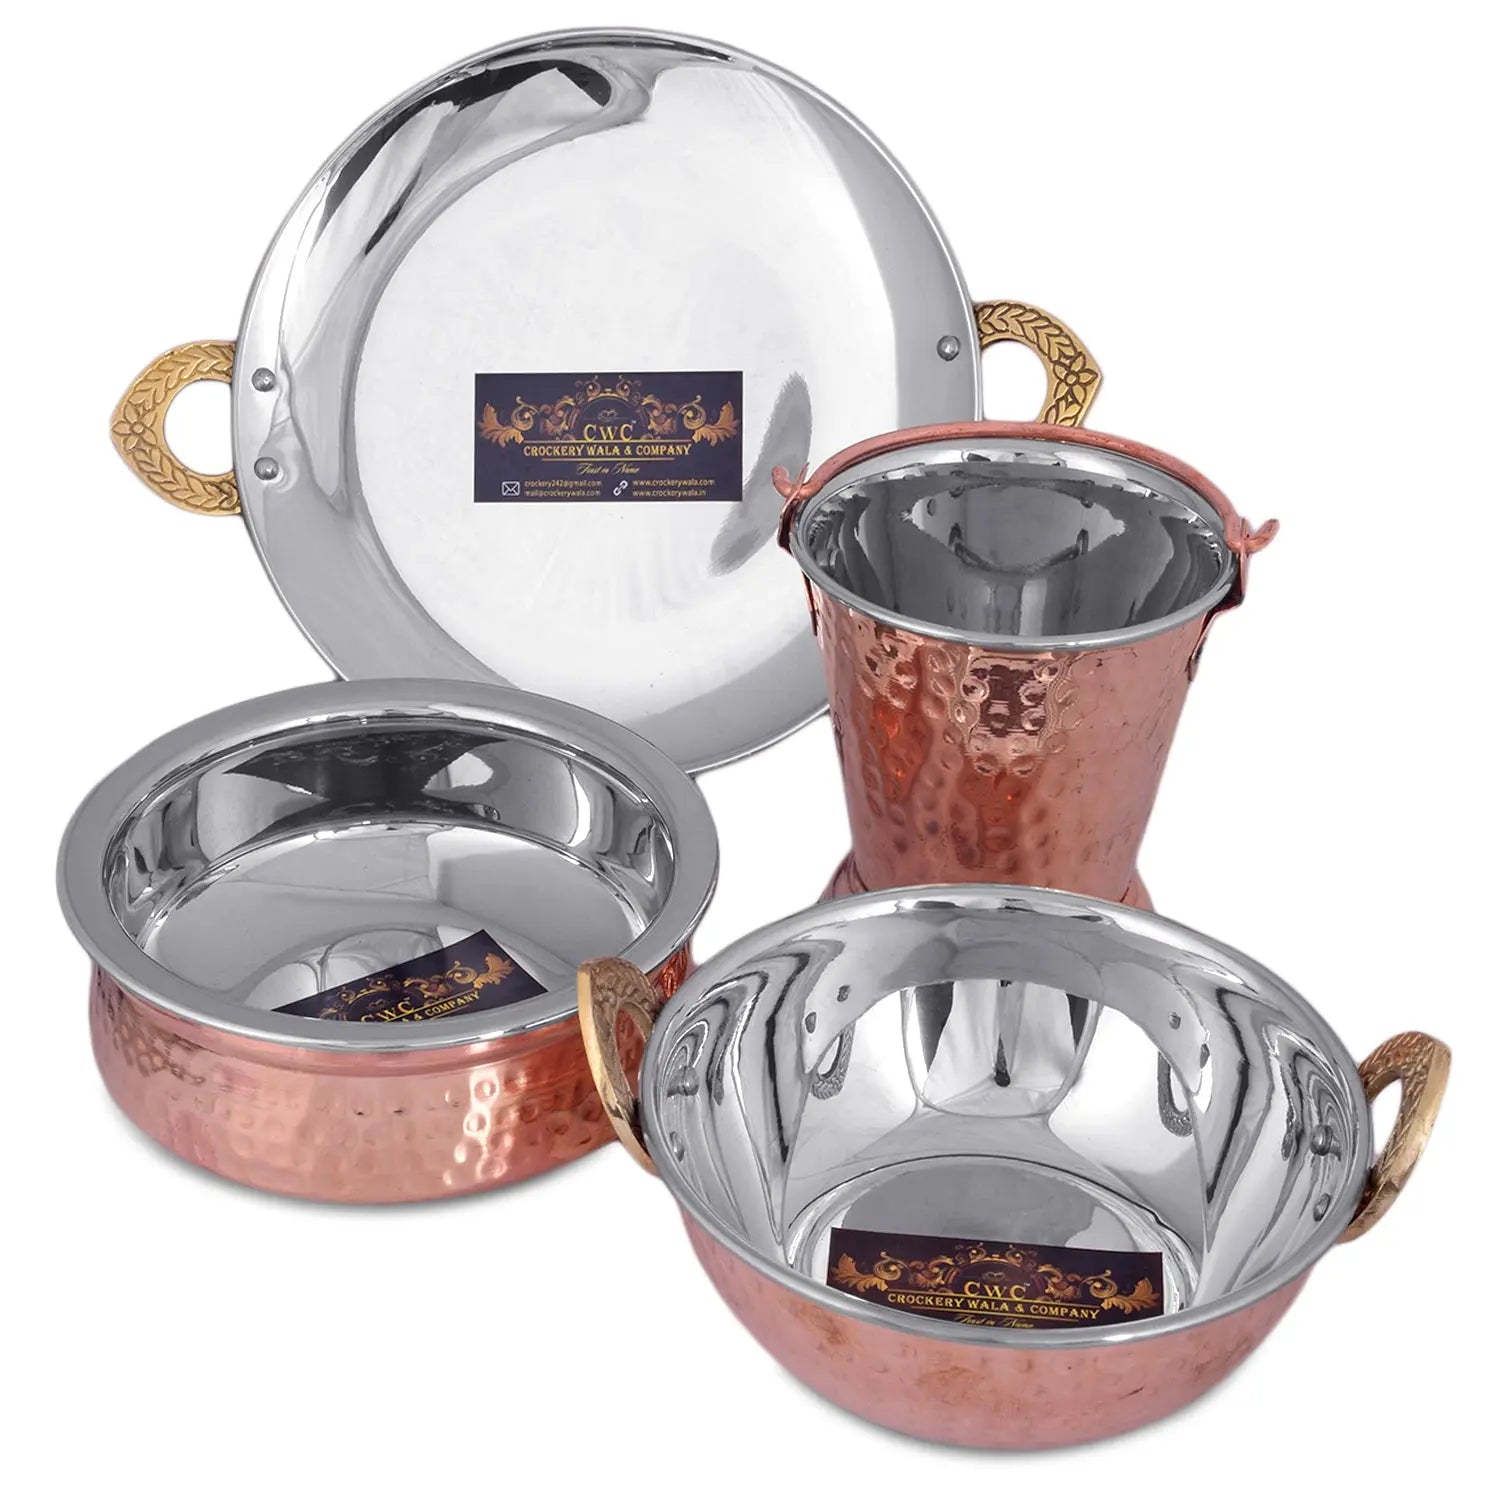 Crockery Wala And Company Steel Copper 1 Bucket Balti, 1 Handi Bowl, 1 Kadai, 1 Tava, Serveware Set, 4 Pcs - Crockery Wala And Company